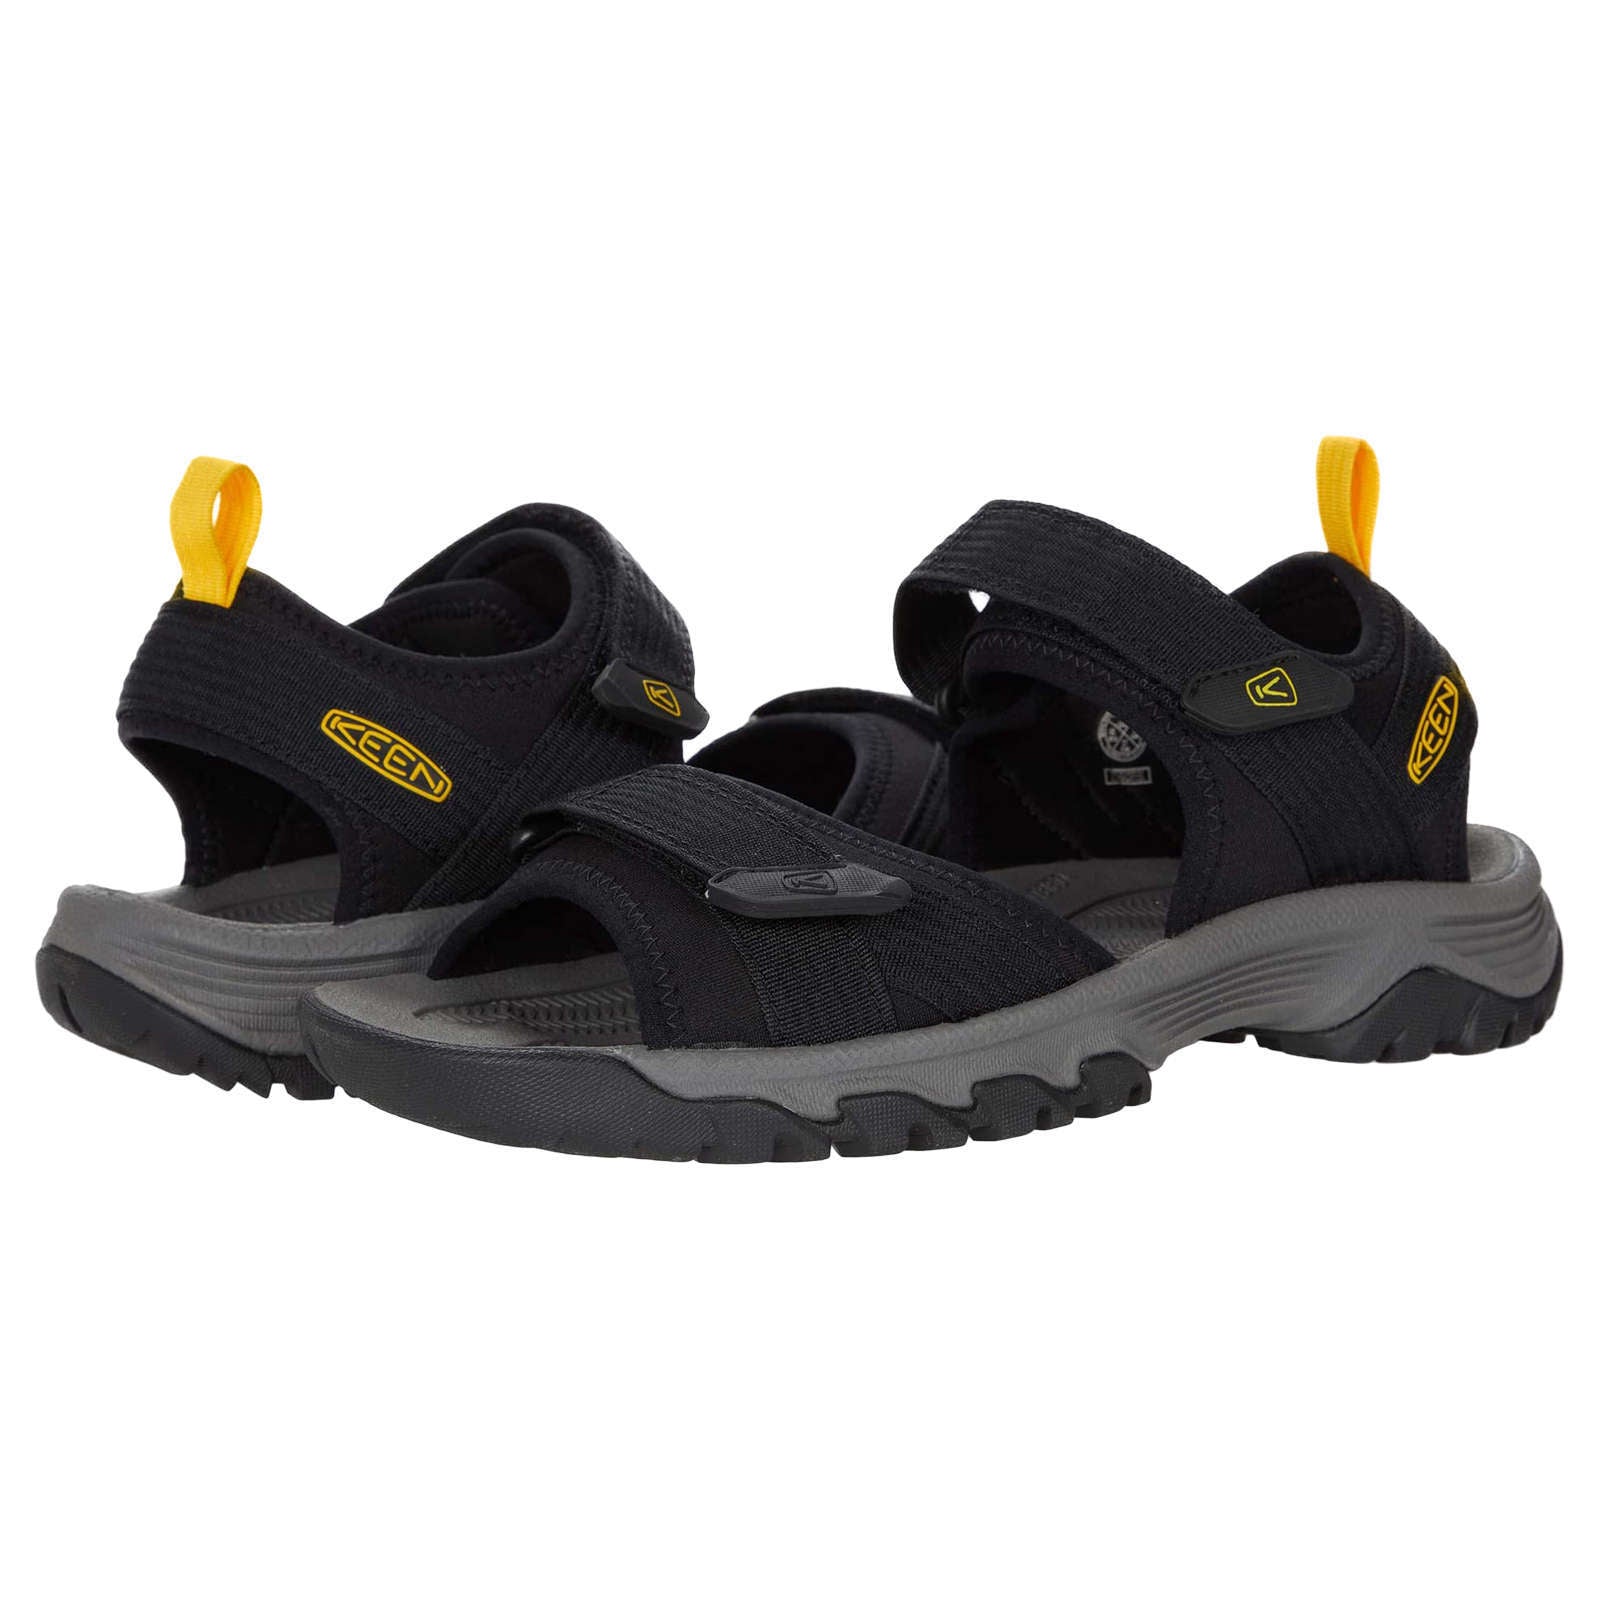 Keen Targhee III Synthetic Textile Men's Hiking Sandals#color_black yellow